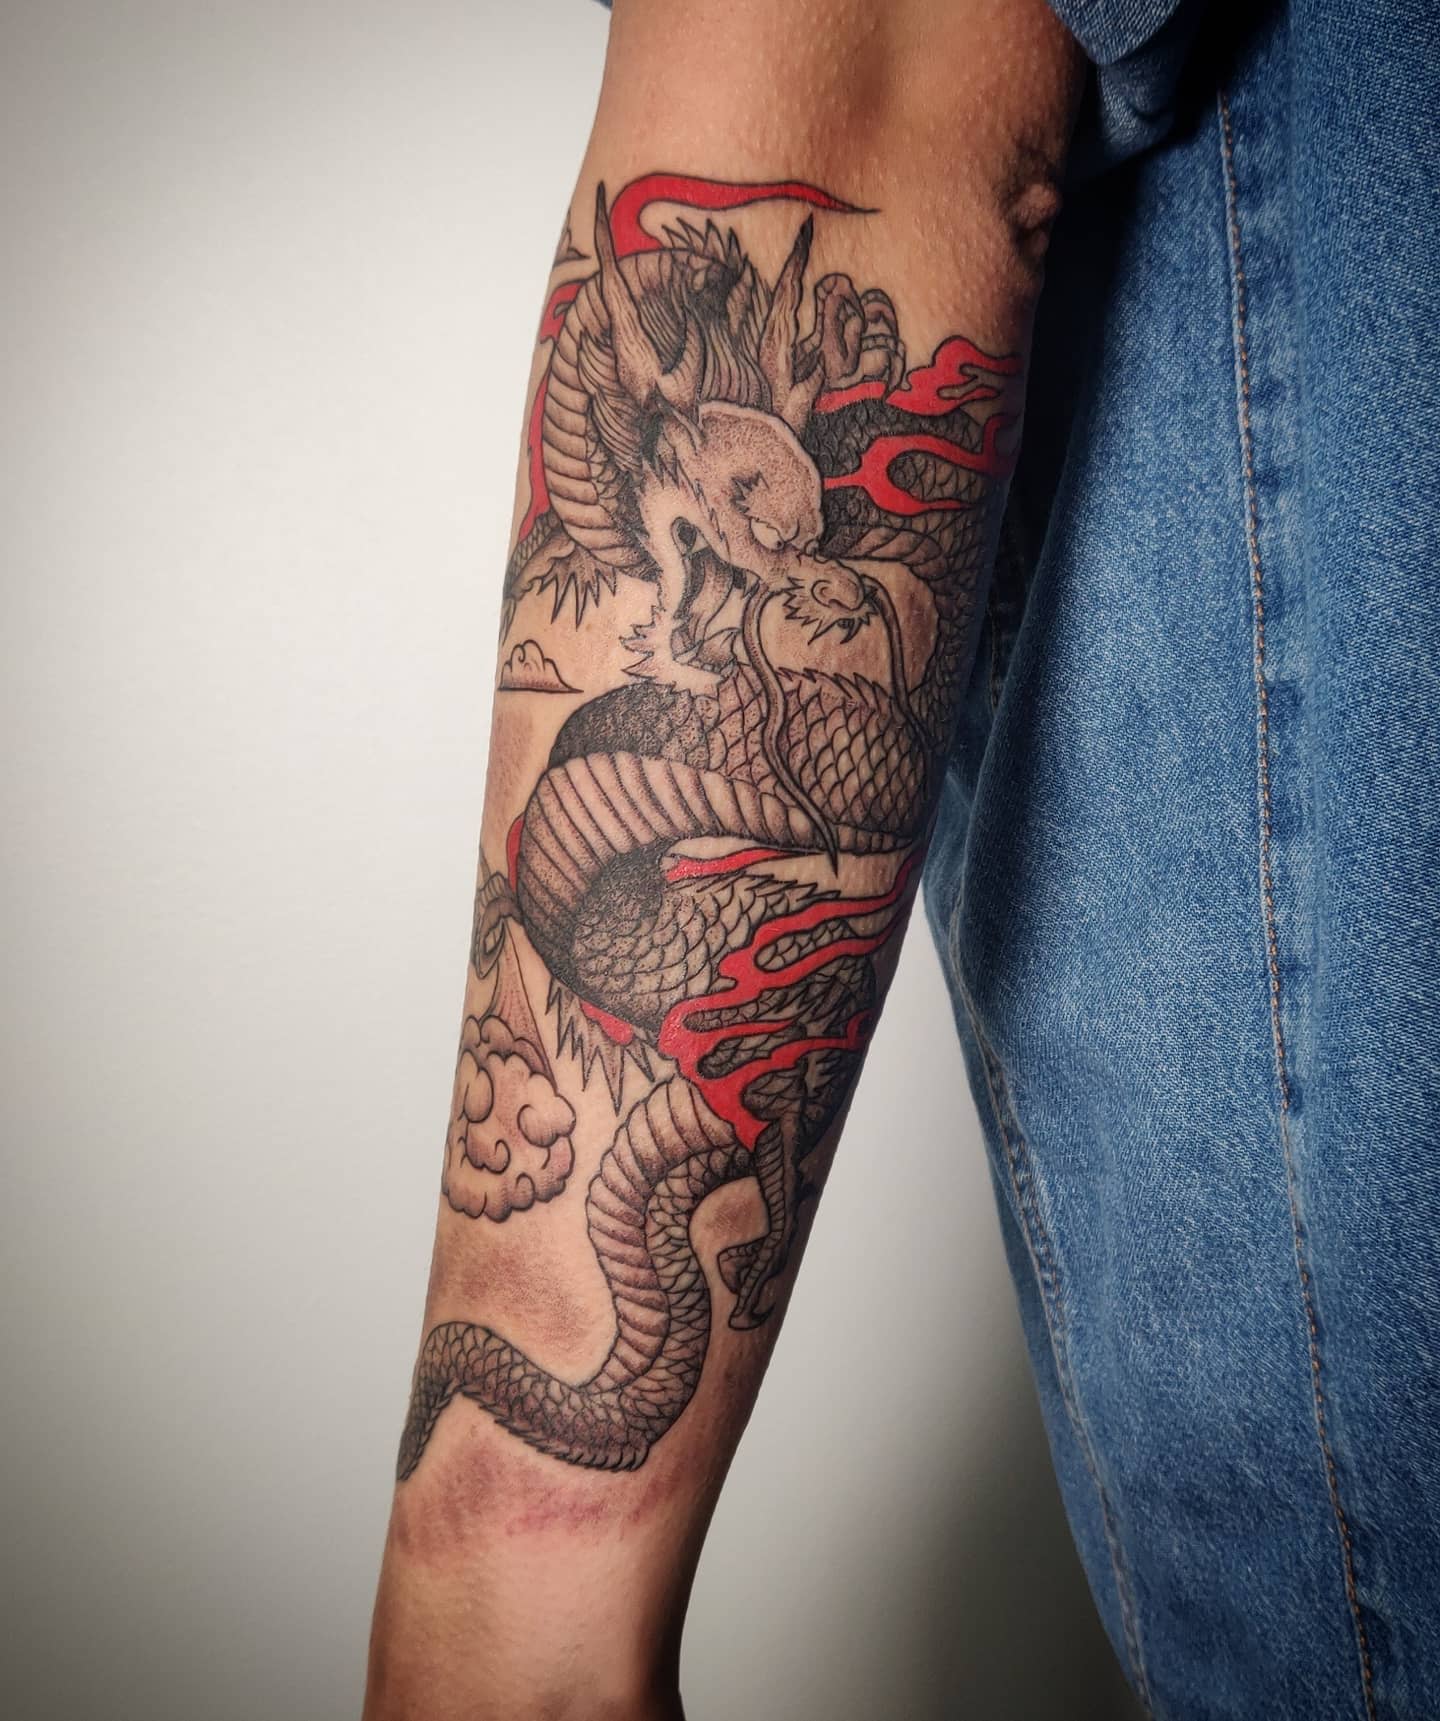 The Top 39 Shenron Tattoo Ideas  2021 Inspiration Guide  Tattoos Leg  tattoos Shenron